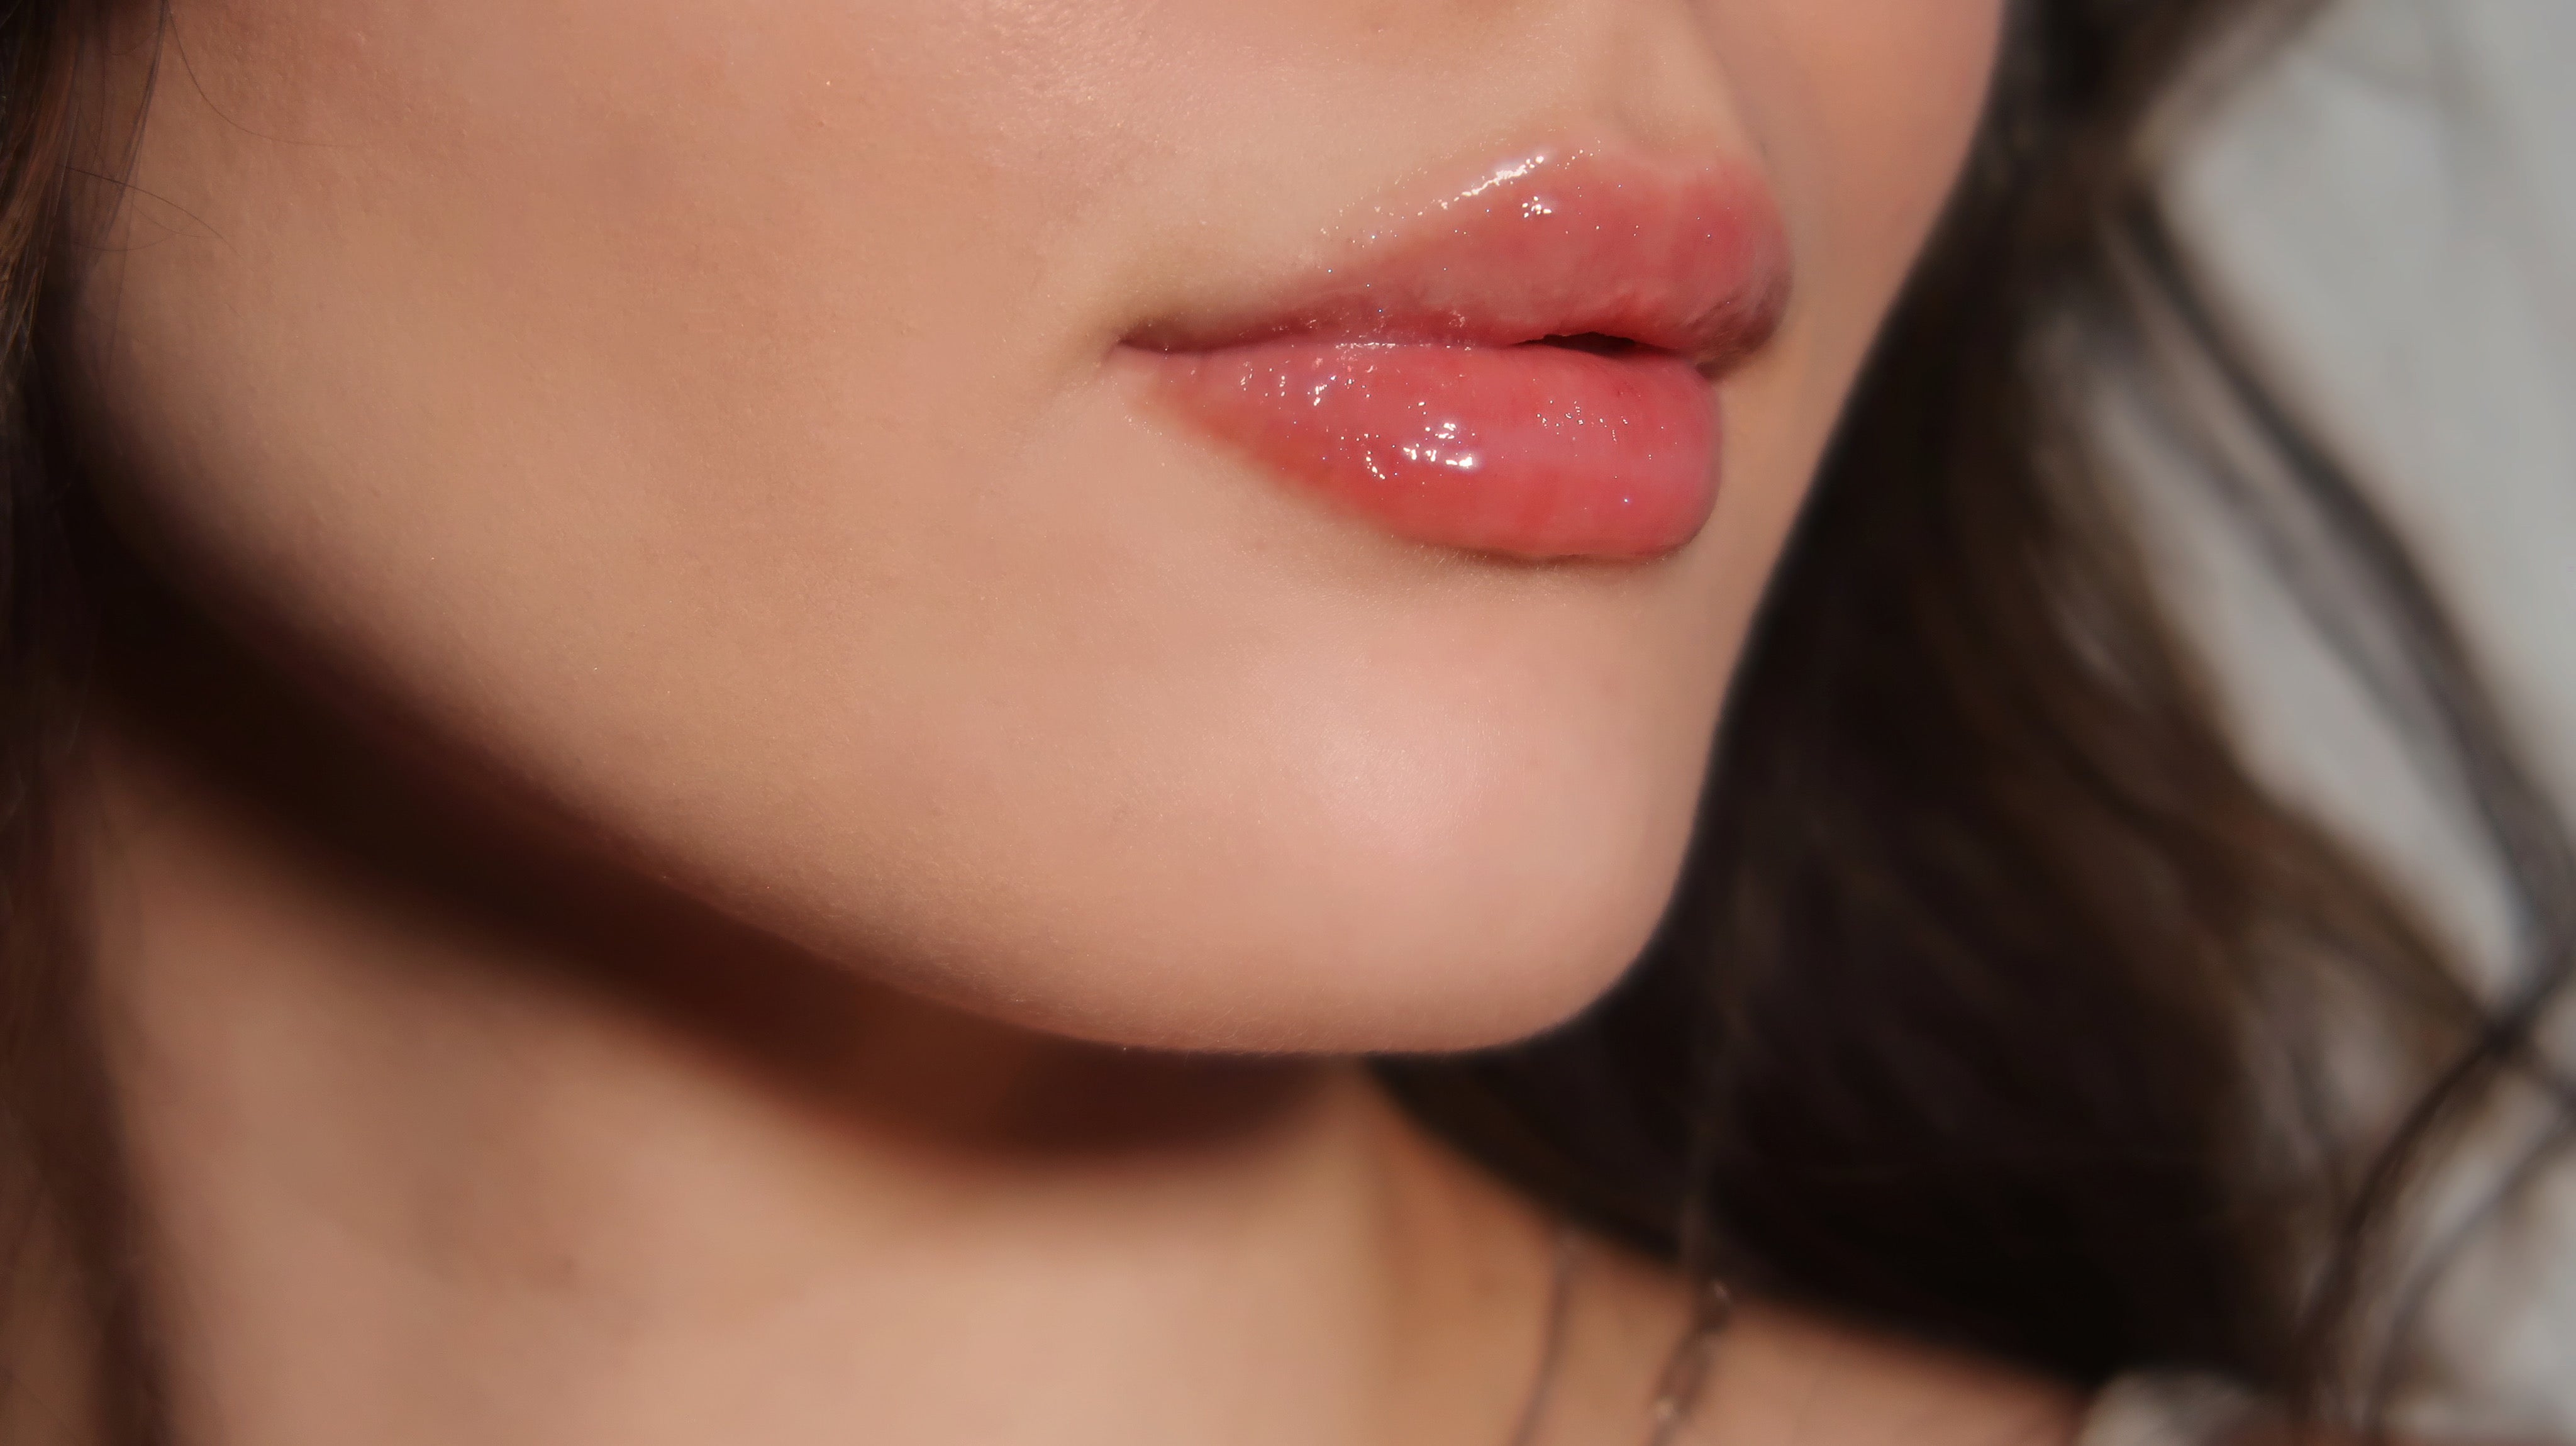 Dream Lip Gloss